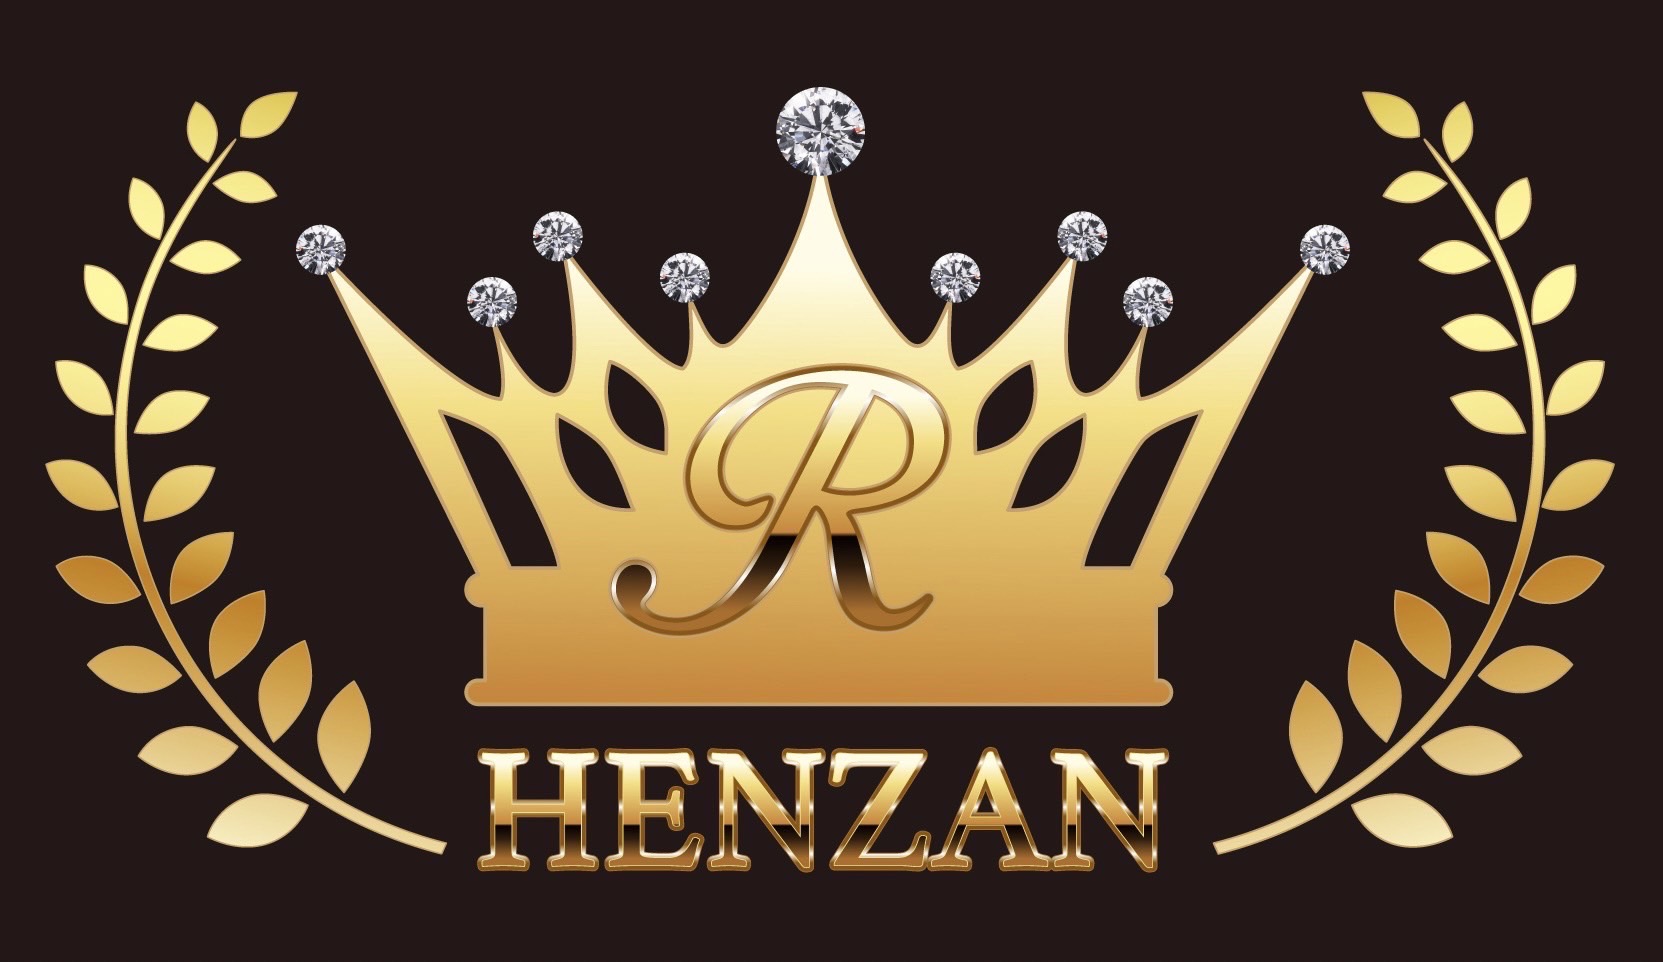 HENZAN